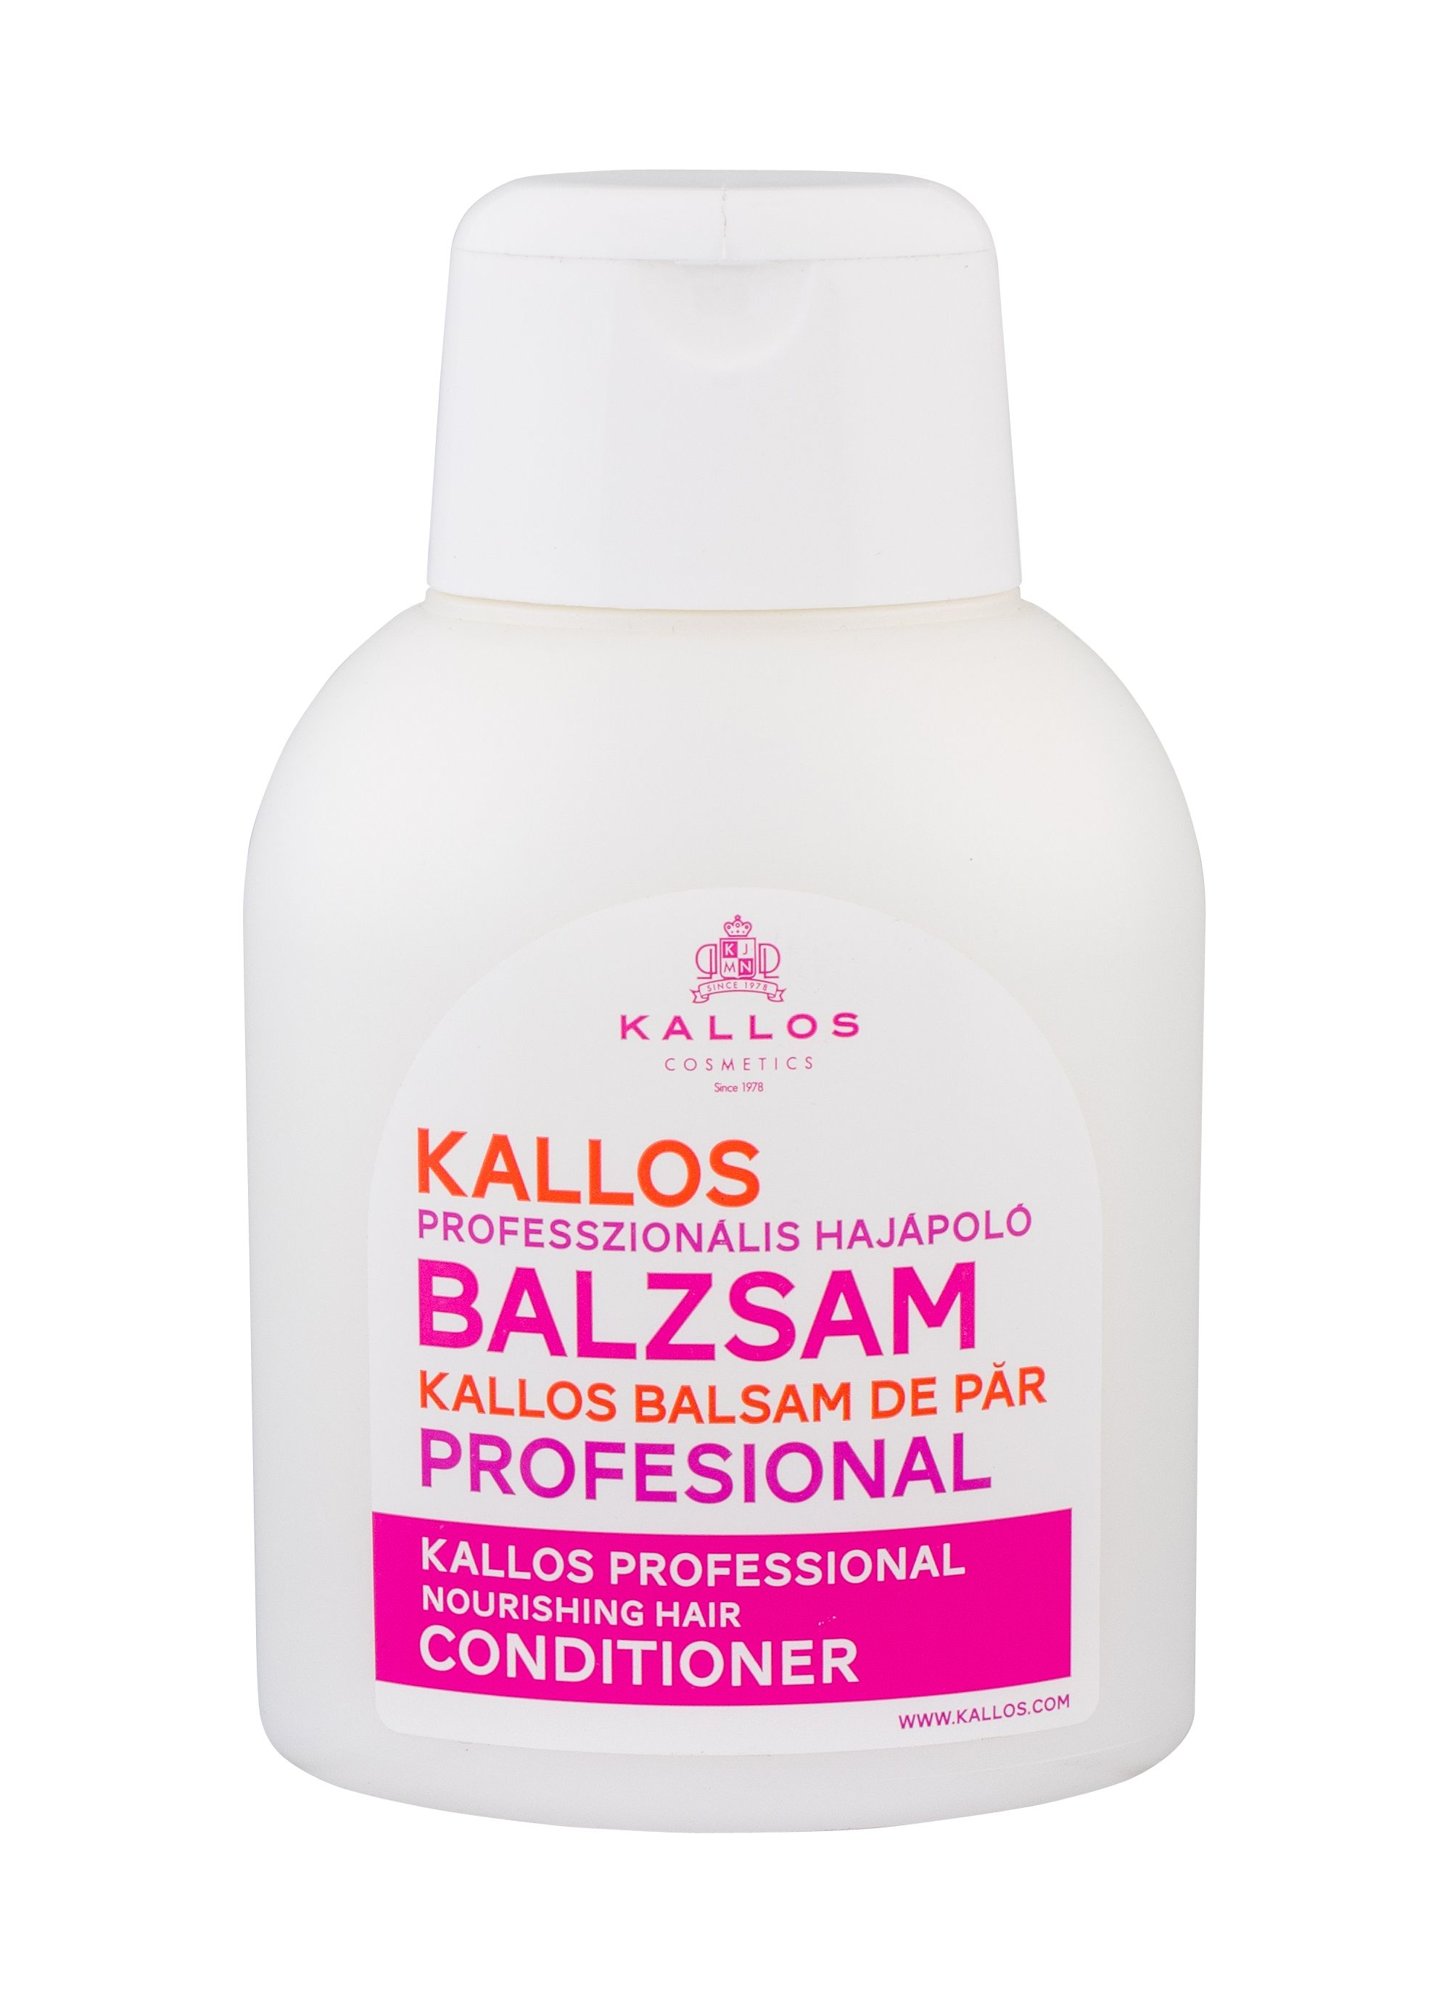 Kallos Cosmetics Professional Nourishing kondicionierius